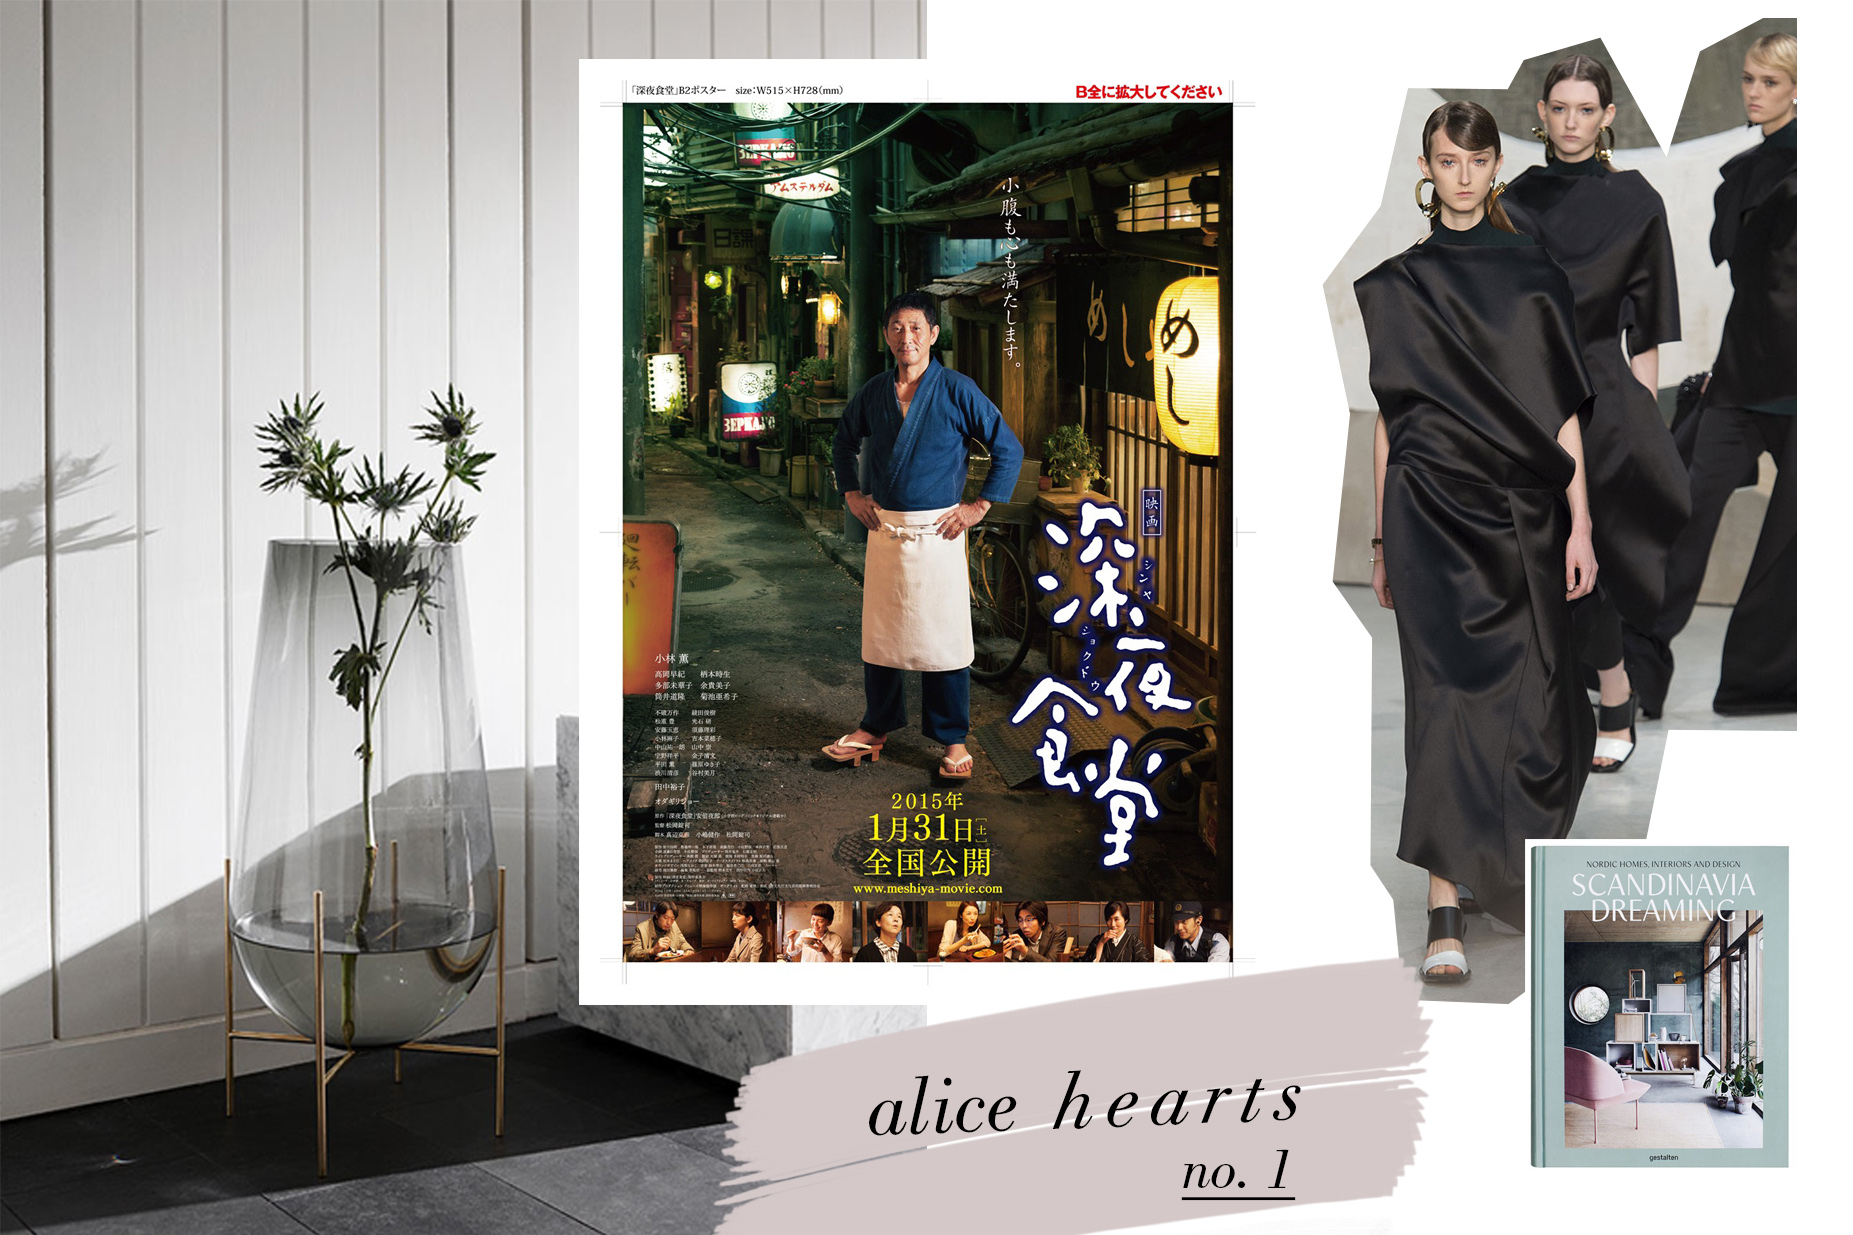 Alice Hearts #1 - Midnight Diner: Tokyo Stories, Menu Èchasse Vase, Marni S/S 16, Scandinavia Dreaming